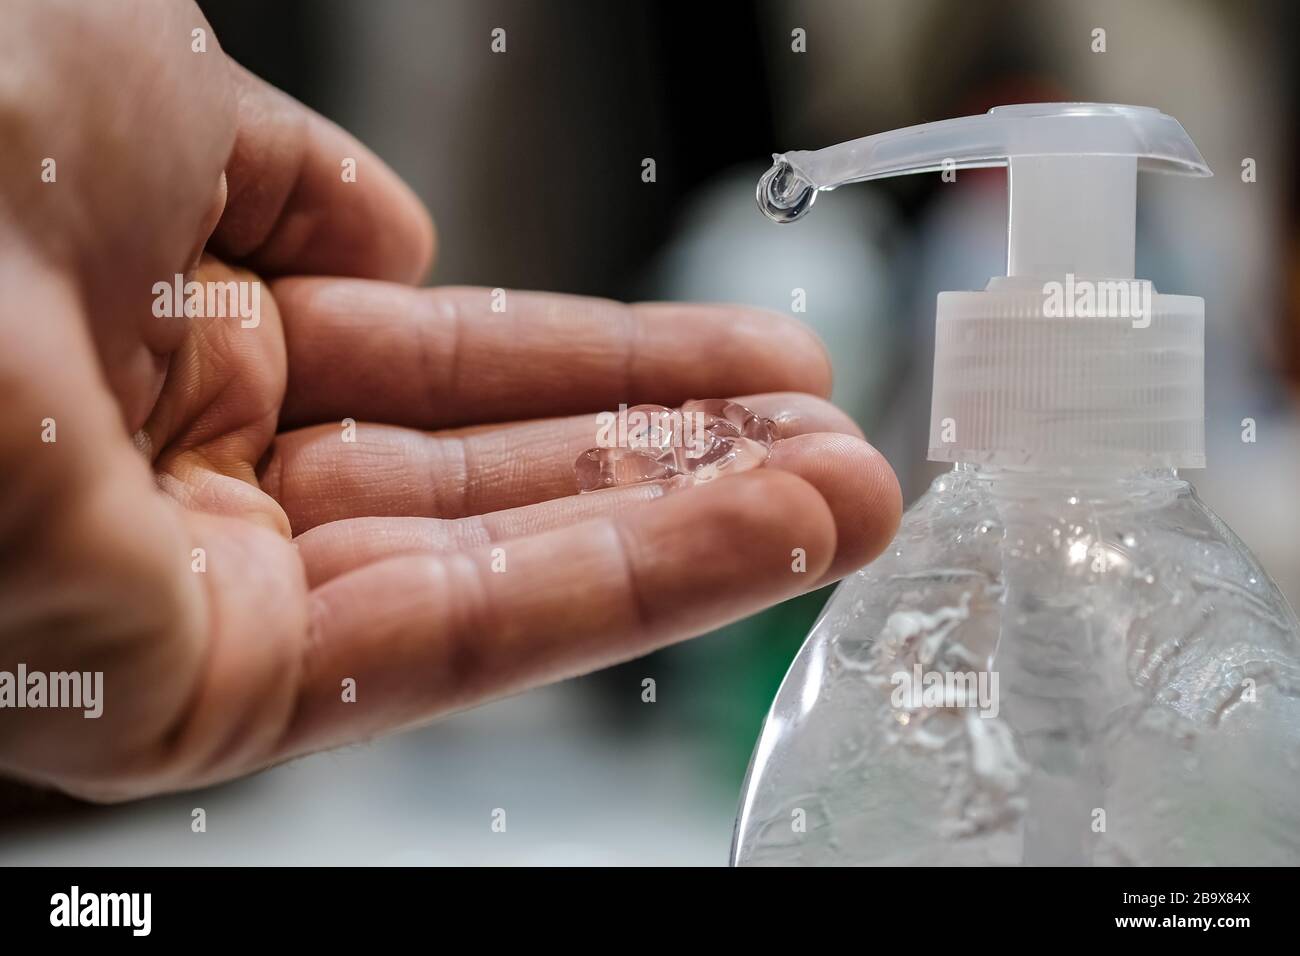 Man disinfecting with hand sanitizer dispenser,corona virus infection disease Stock Photo